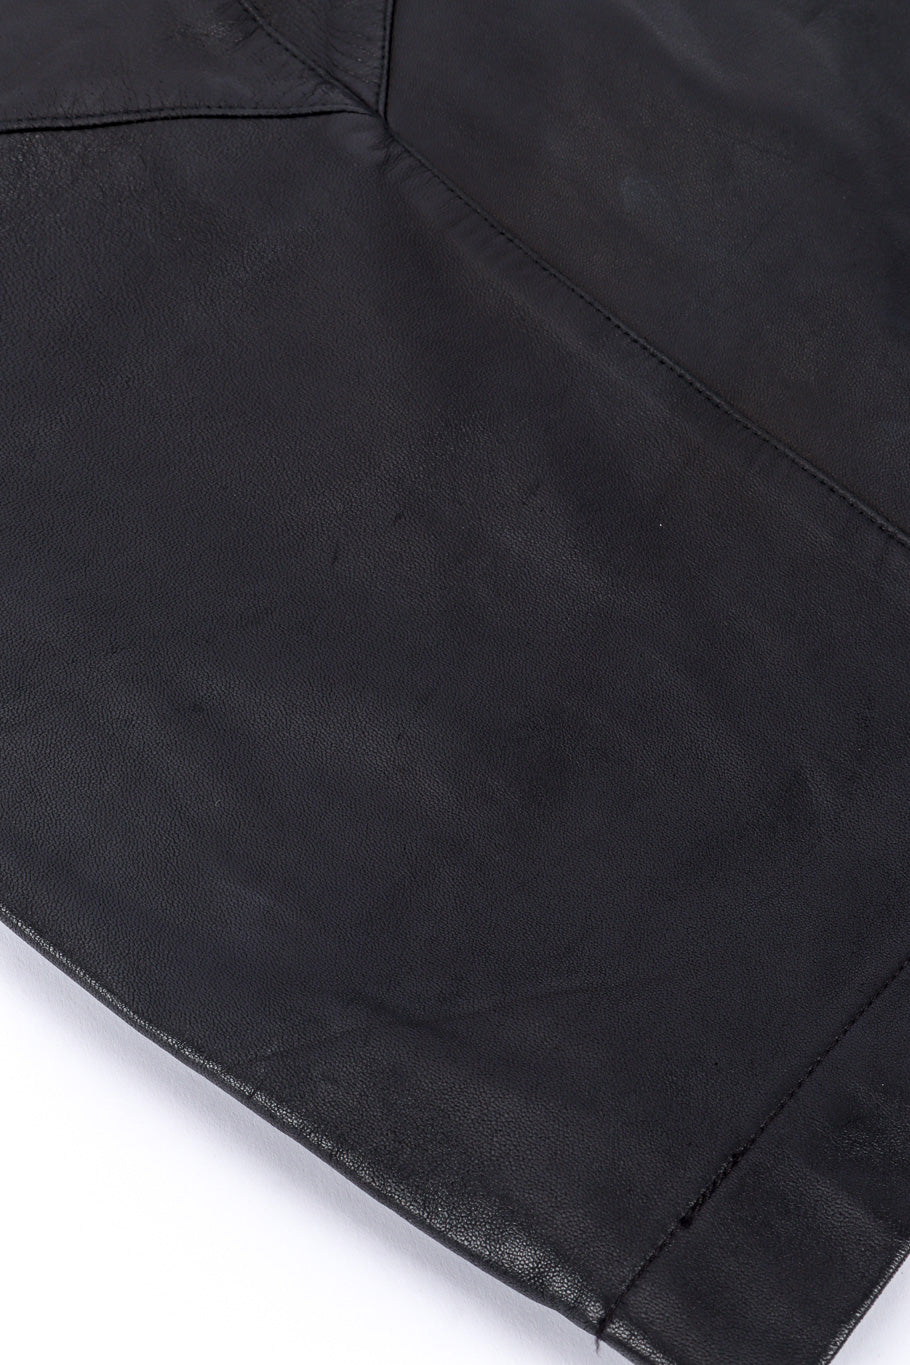 Vintage Alaia Leather Pencil Skirt condition closeup @recessla